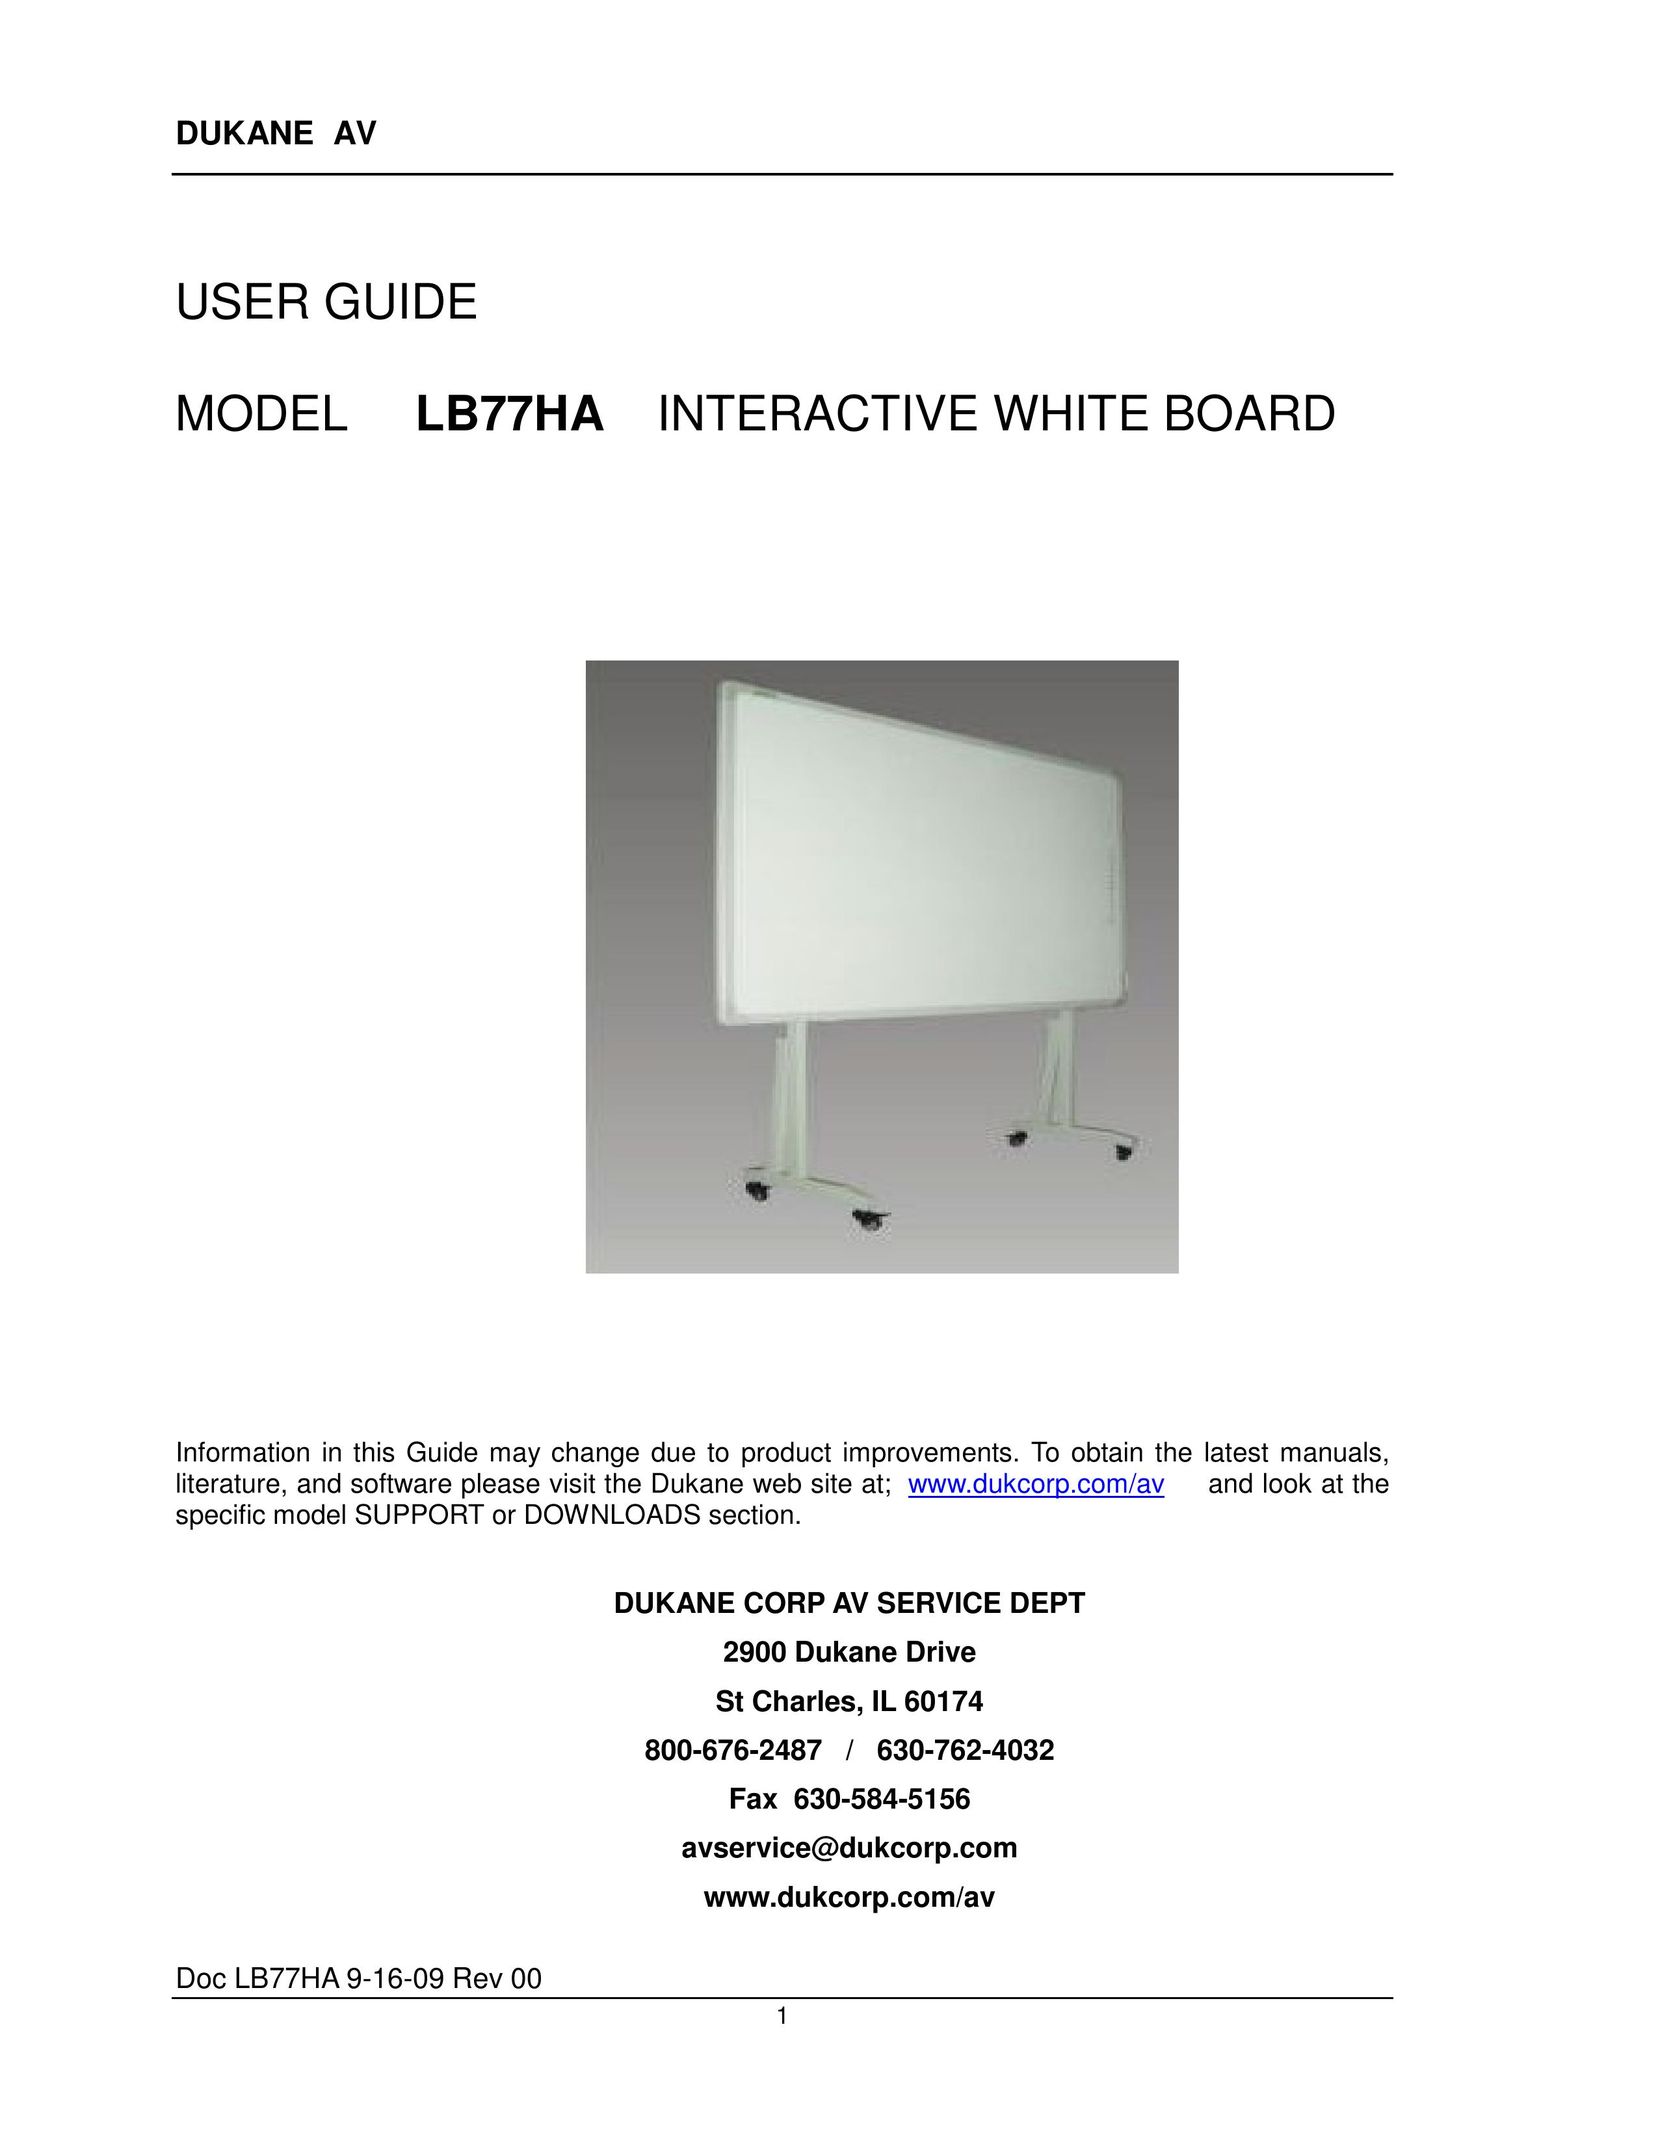 Dukane LB77HA Whiteboard Accessories User Manual